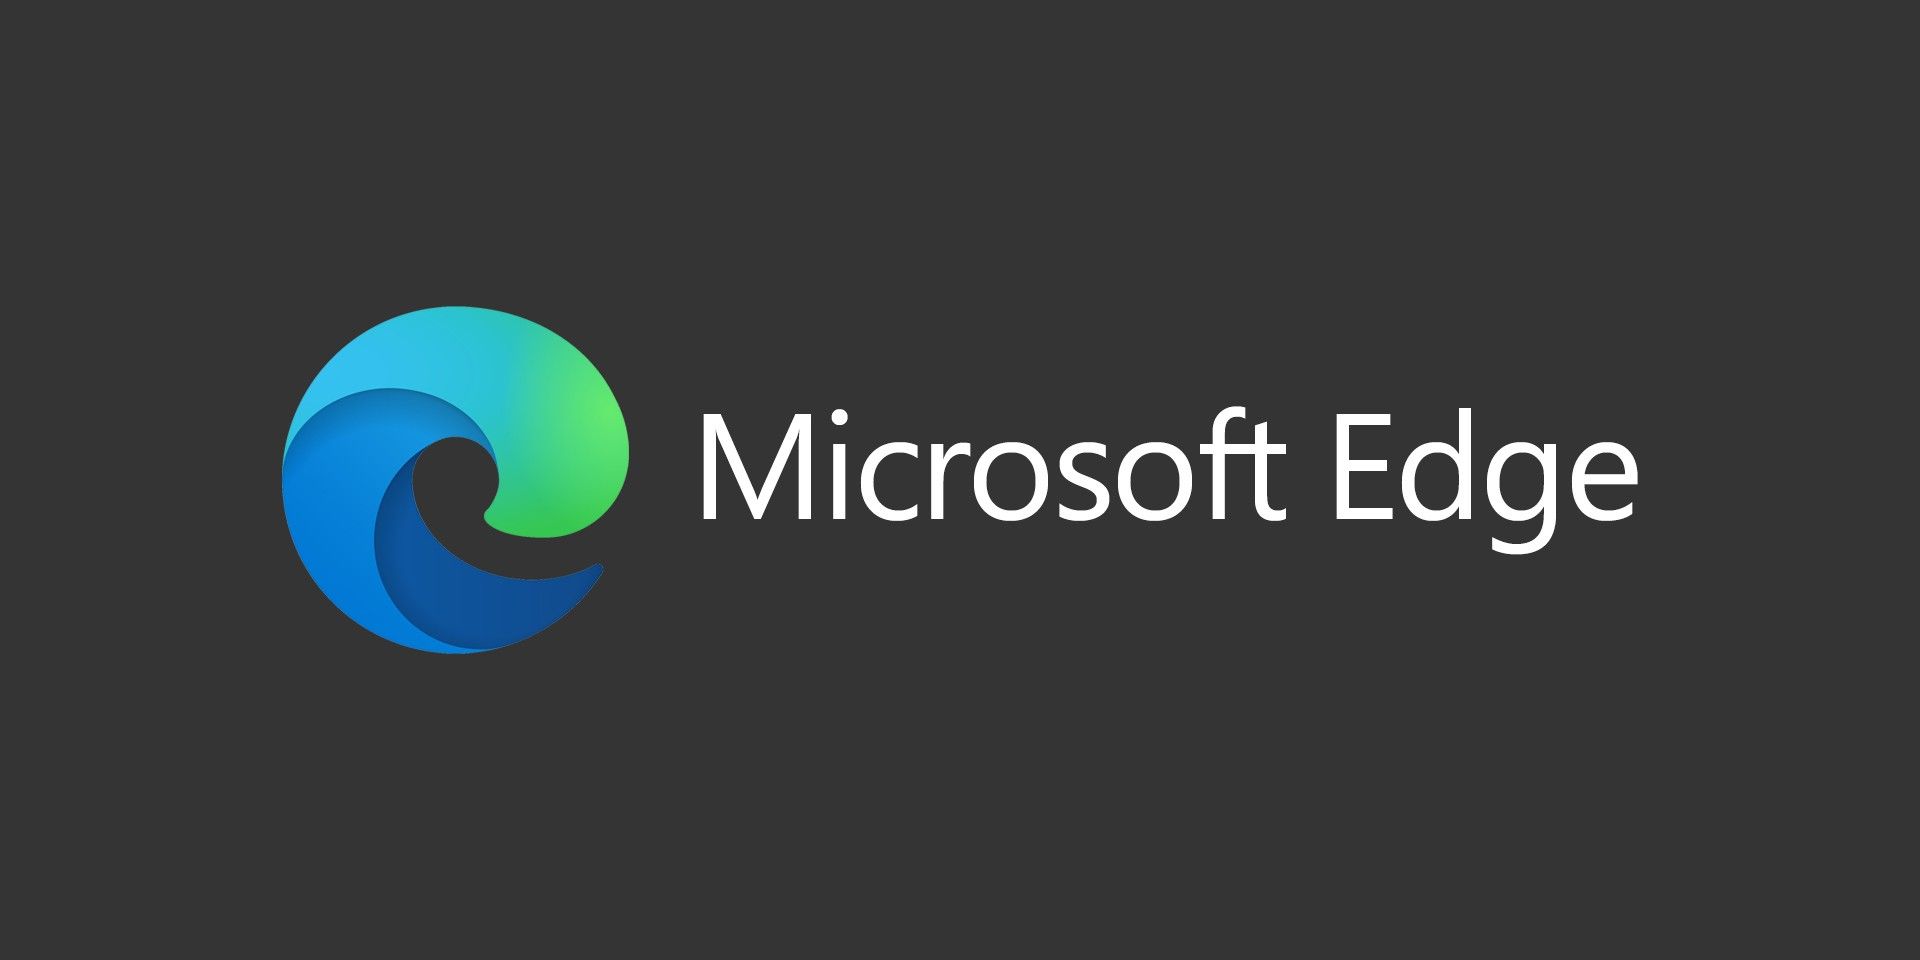 https://static1.srcdn.com/wordpress/wp-content/uploads/2019/12/Microsoft-Edge-New-Logo-2019-Gray.jpg